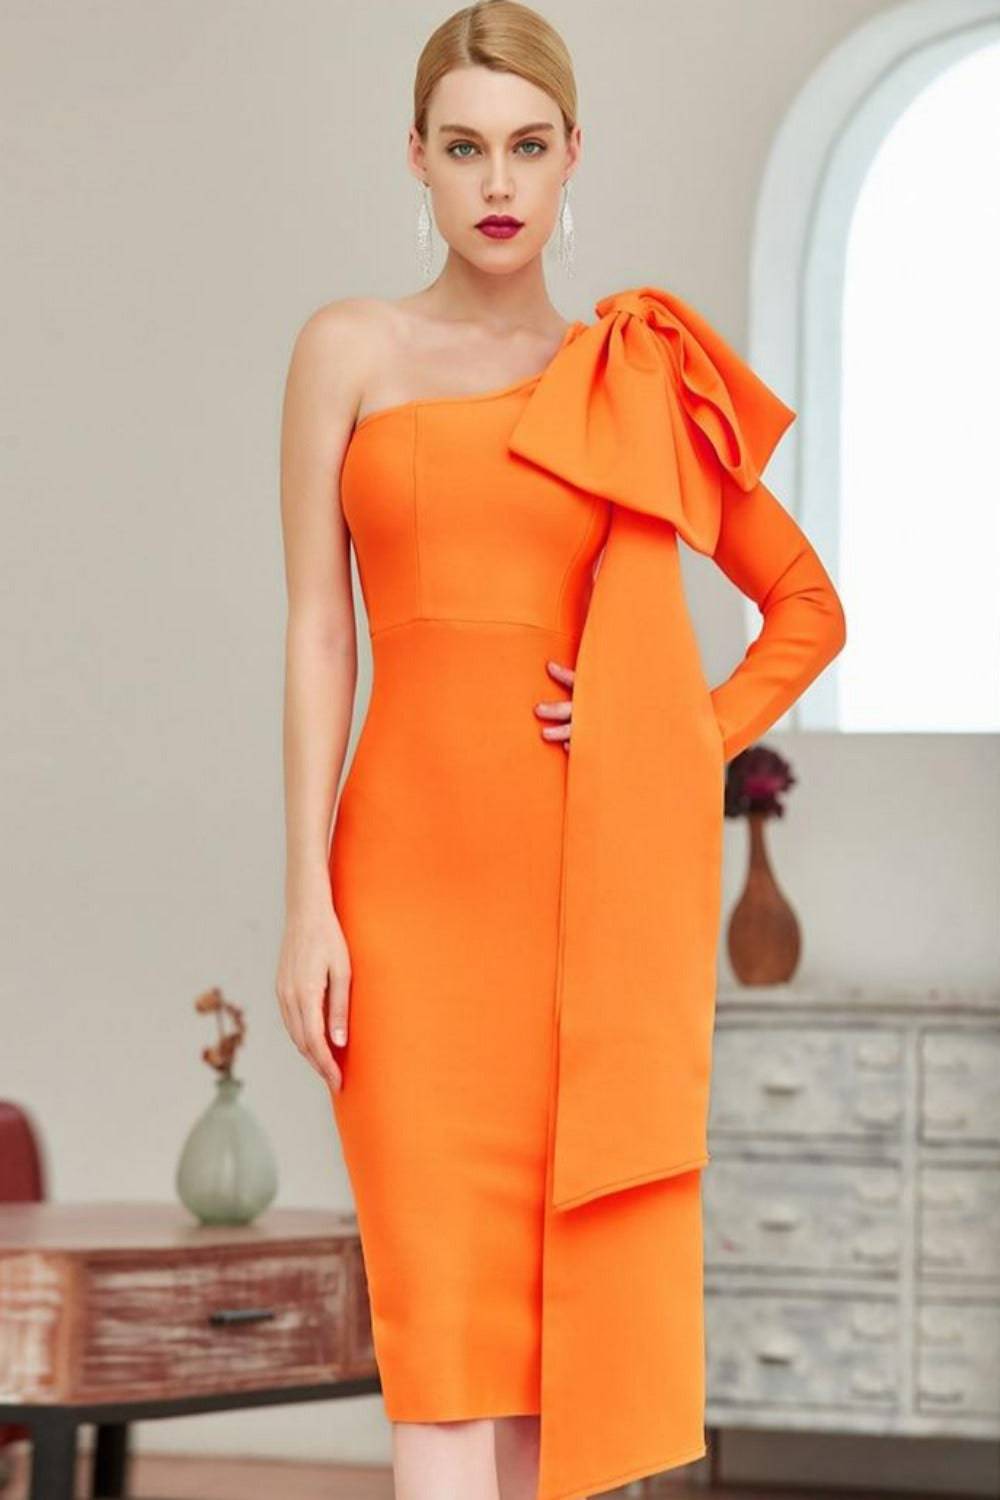 Ruffle Bow Long Sleeve off the Shoulder Bodycon Orange Midi Cocktail Dress - TGC Boutique - Bodycon Dress